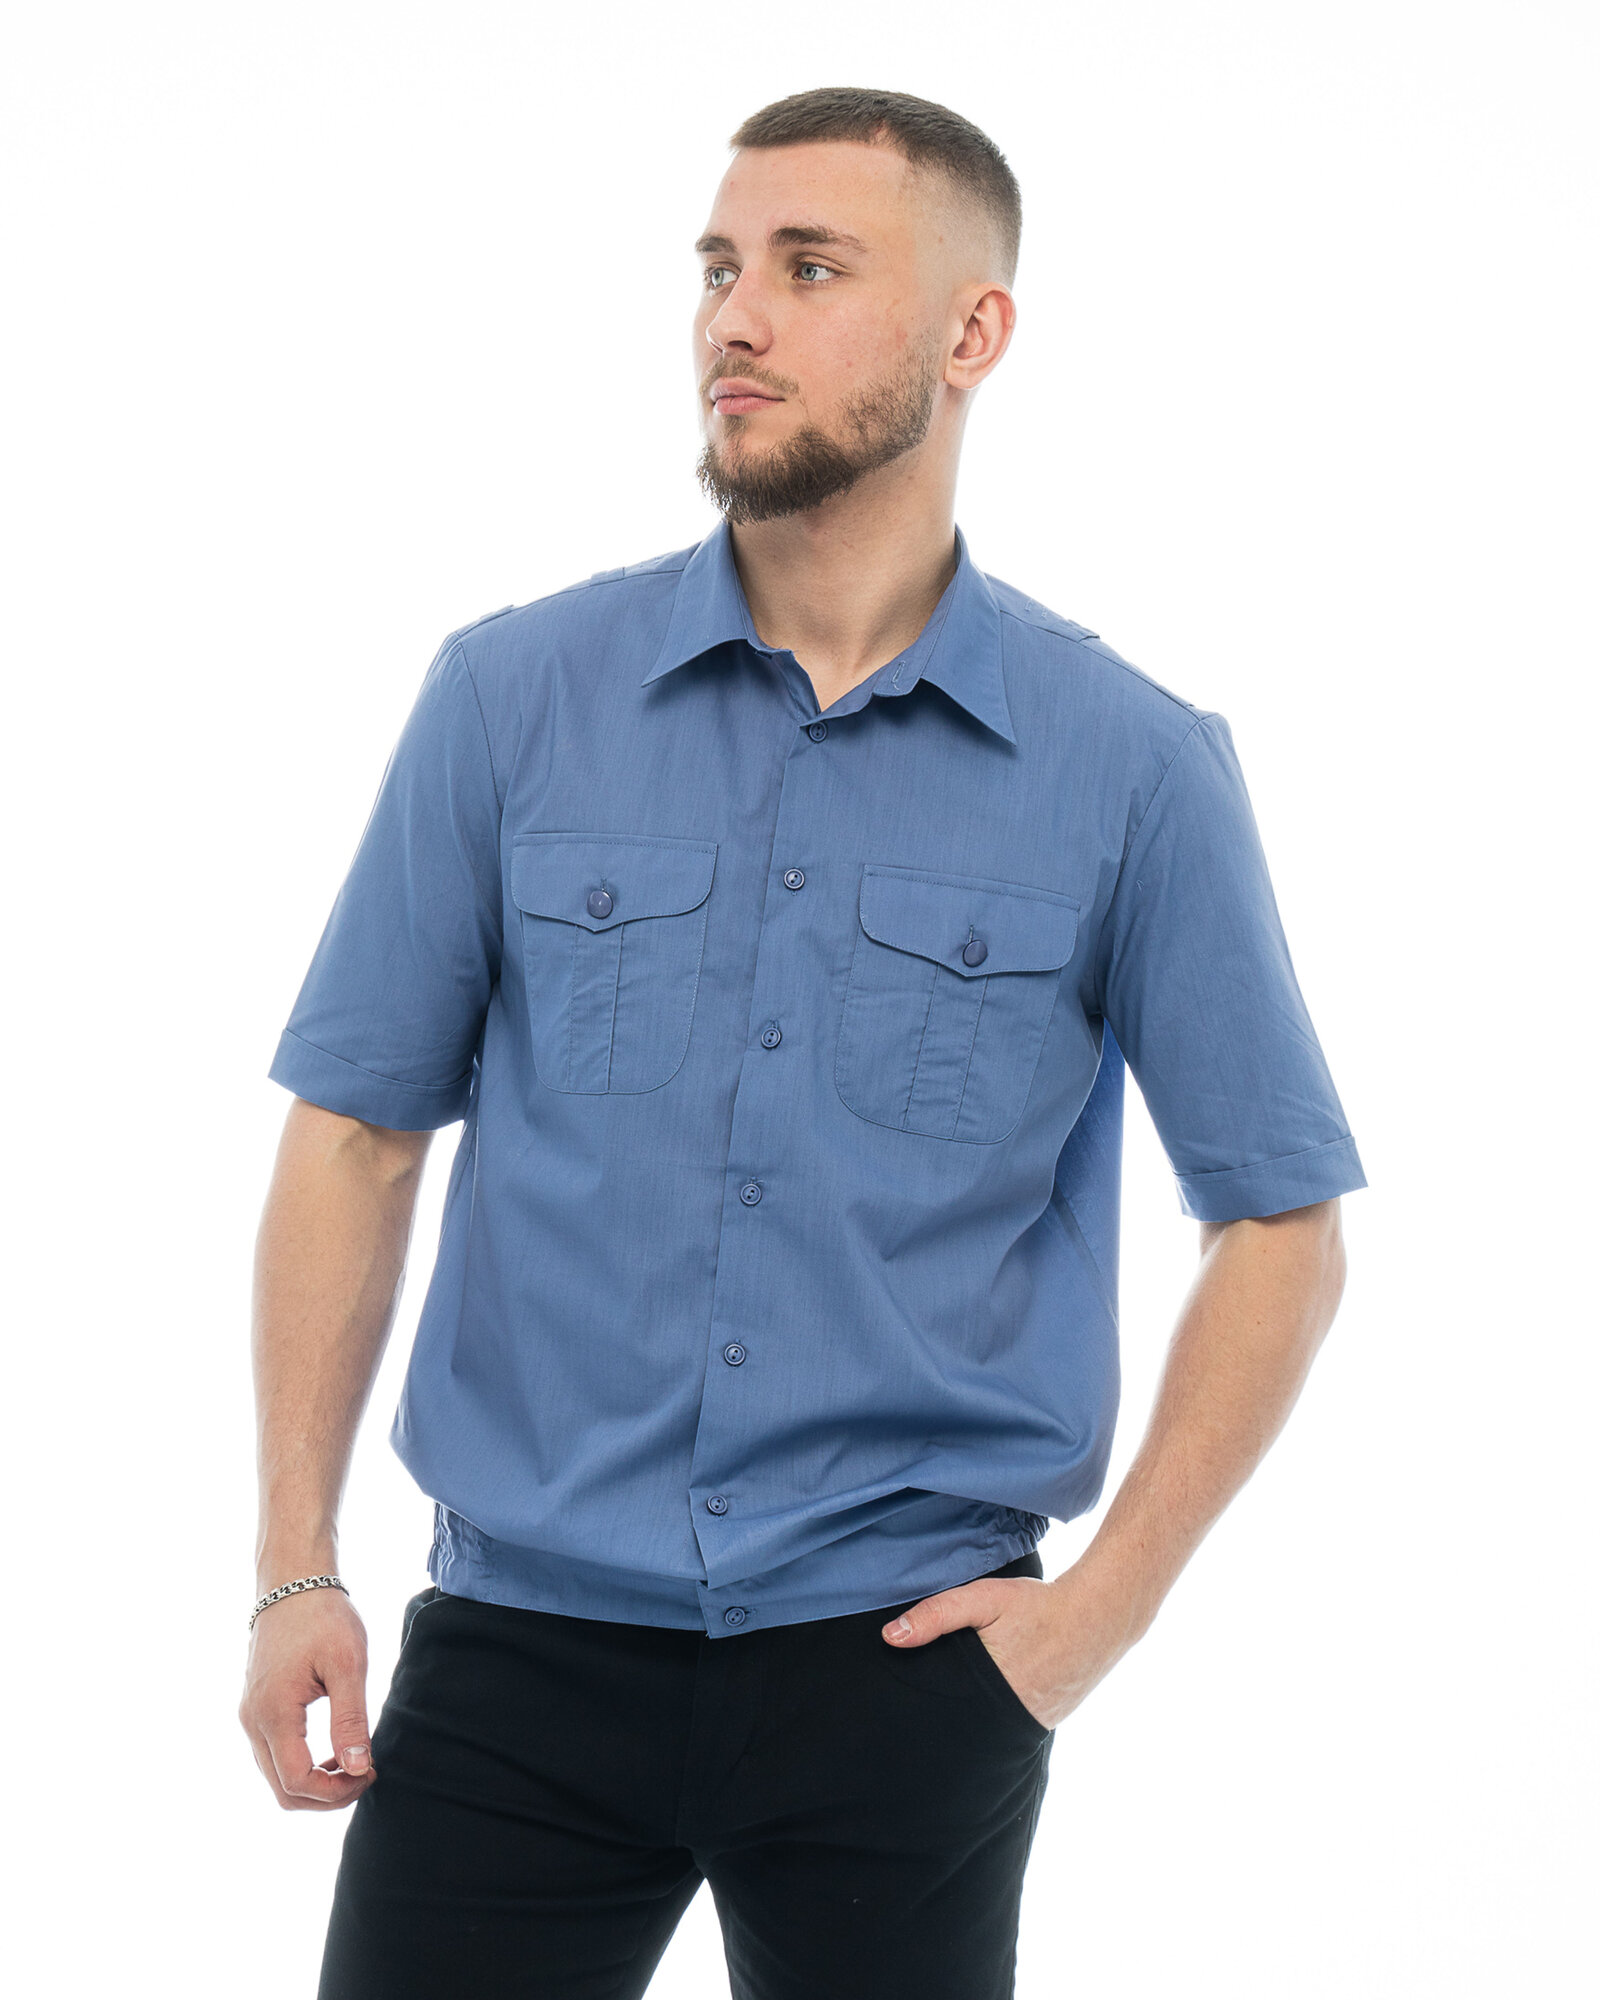 Мужская форменная рубашка Imperator Army Blue-K рос. р-р: 56/XL (170-178, 44 ворот)